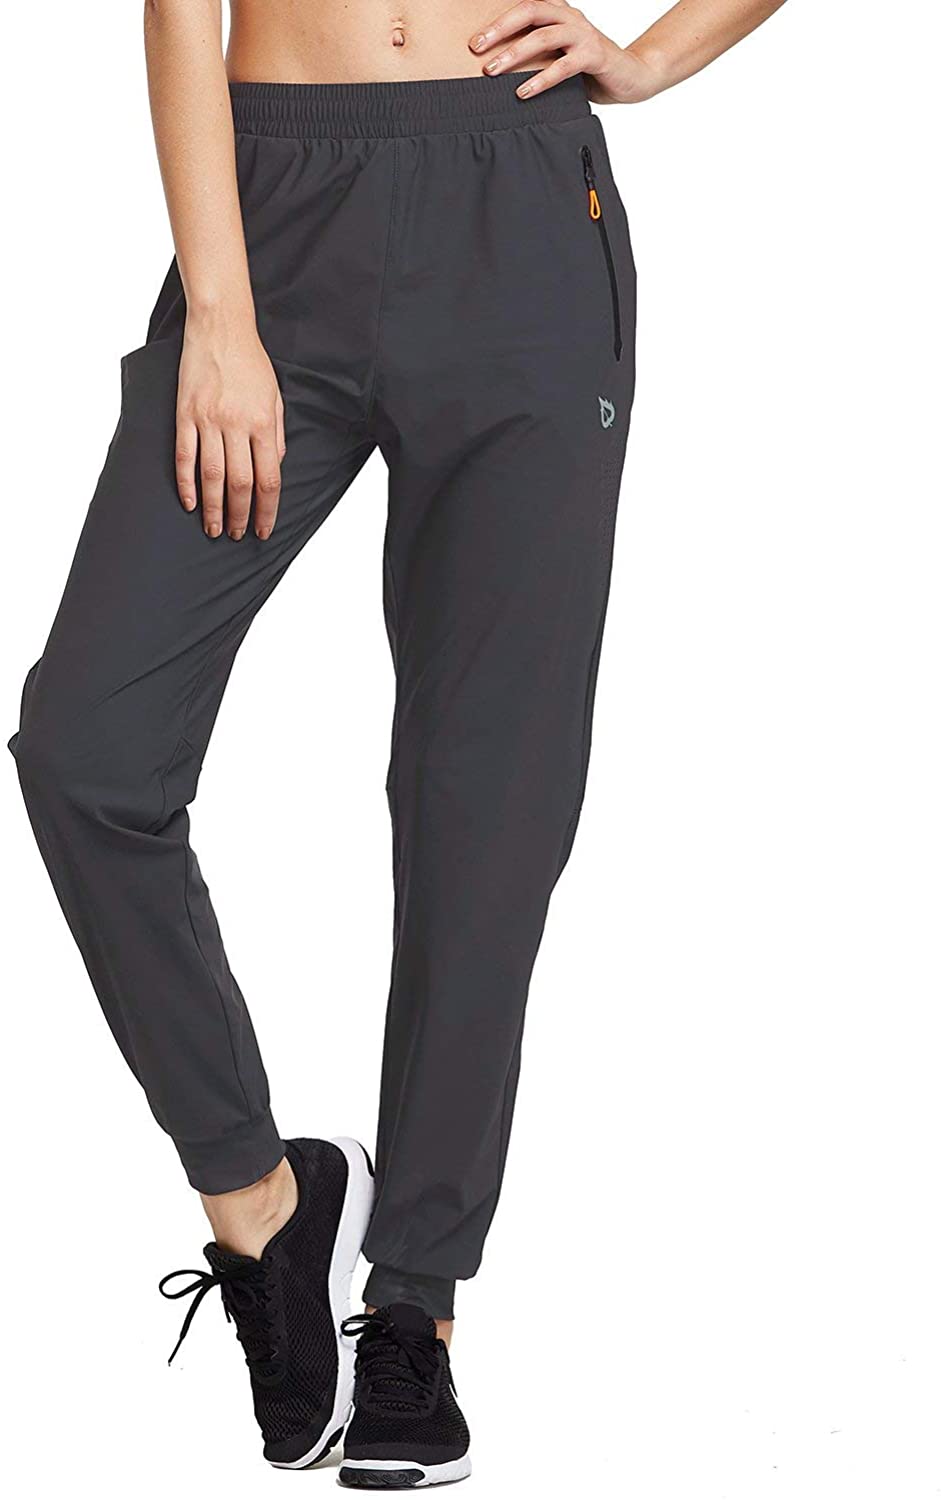 $8/mo - Finance BALEAF Women's Hiking Pants Quick Dry Lightweight